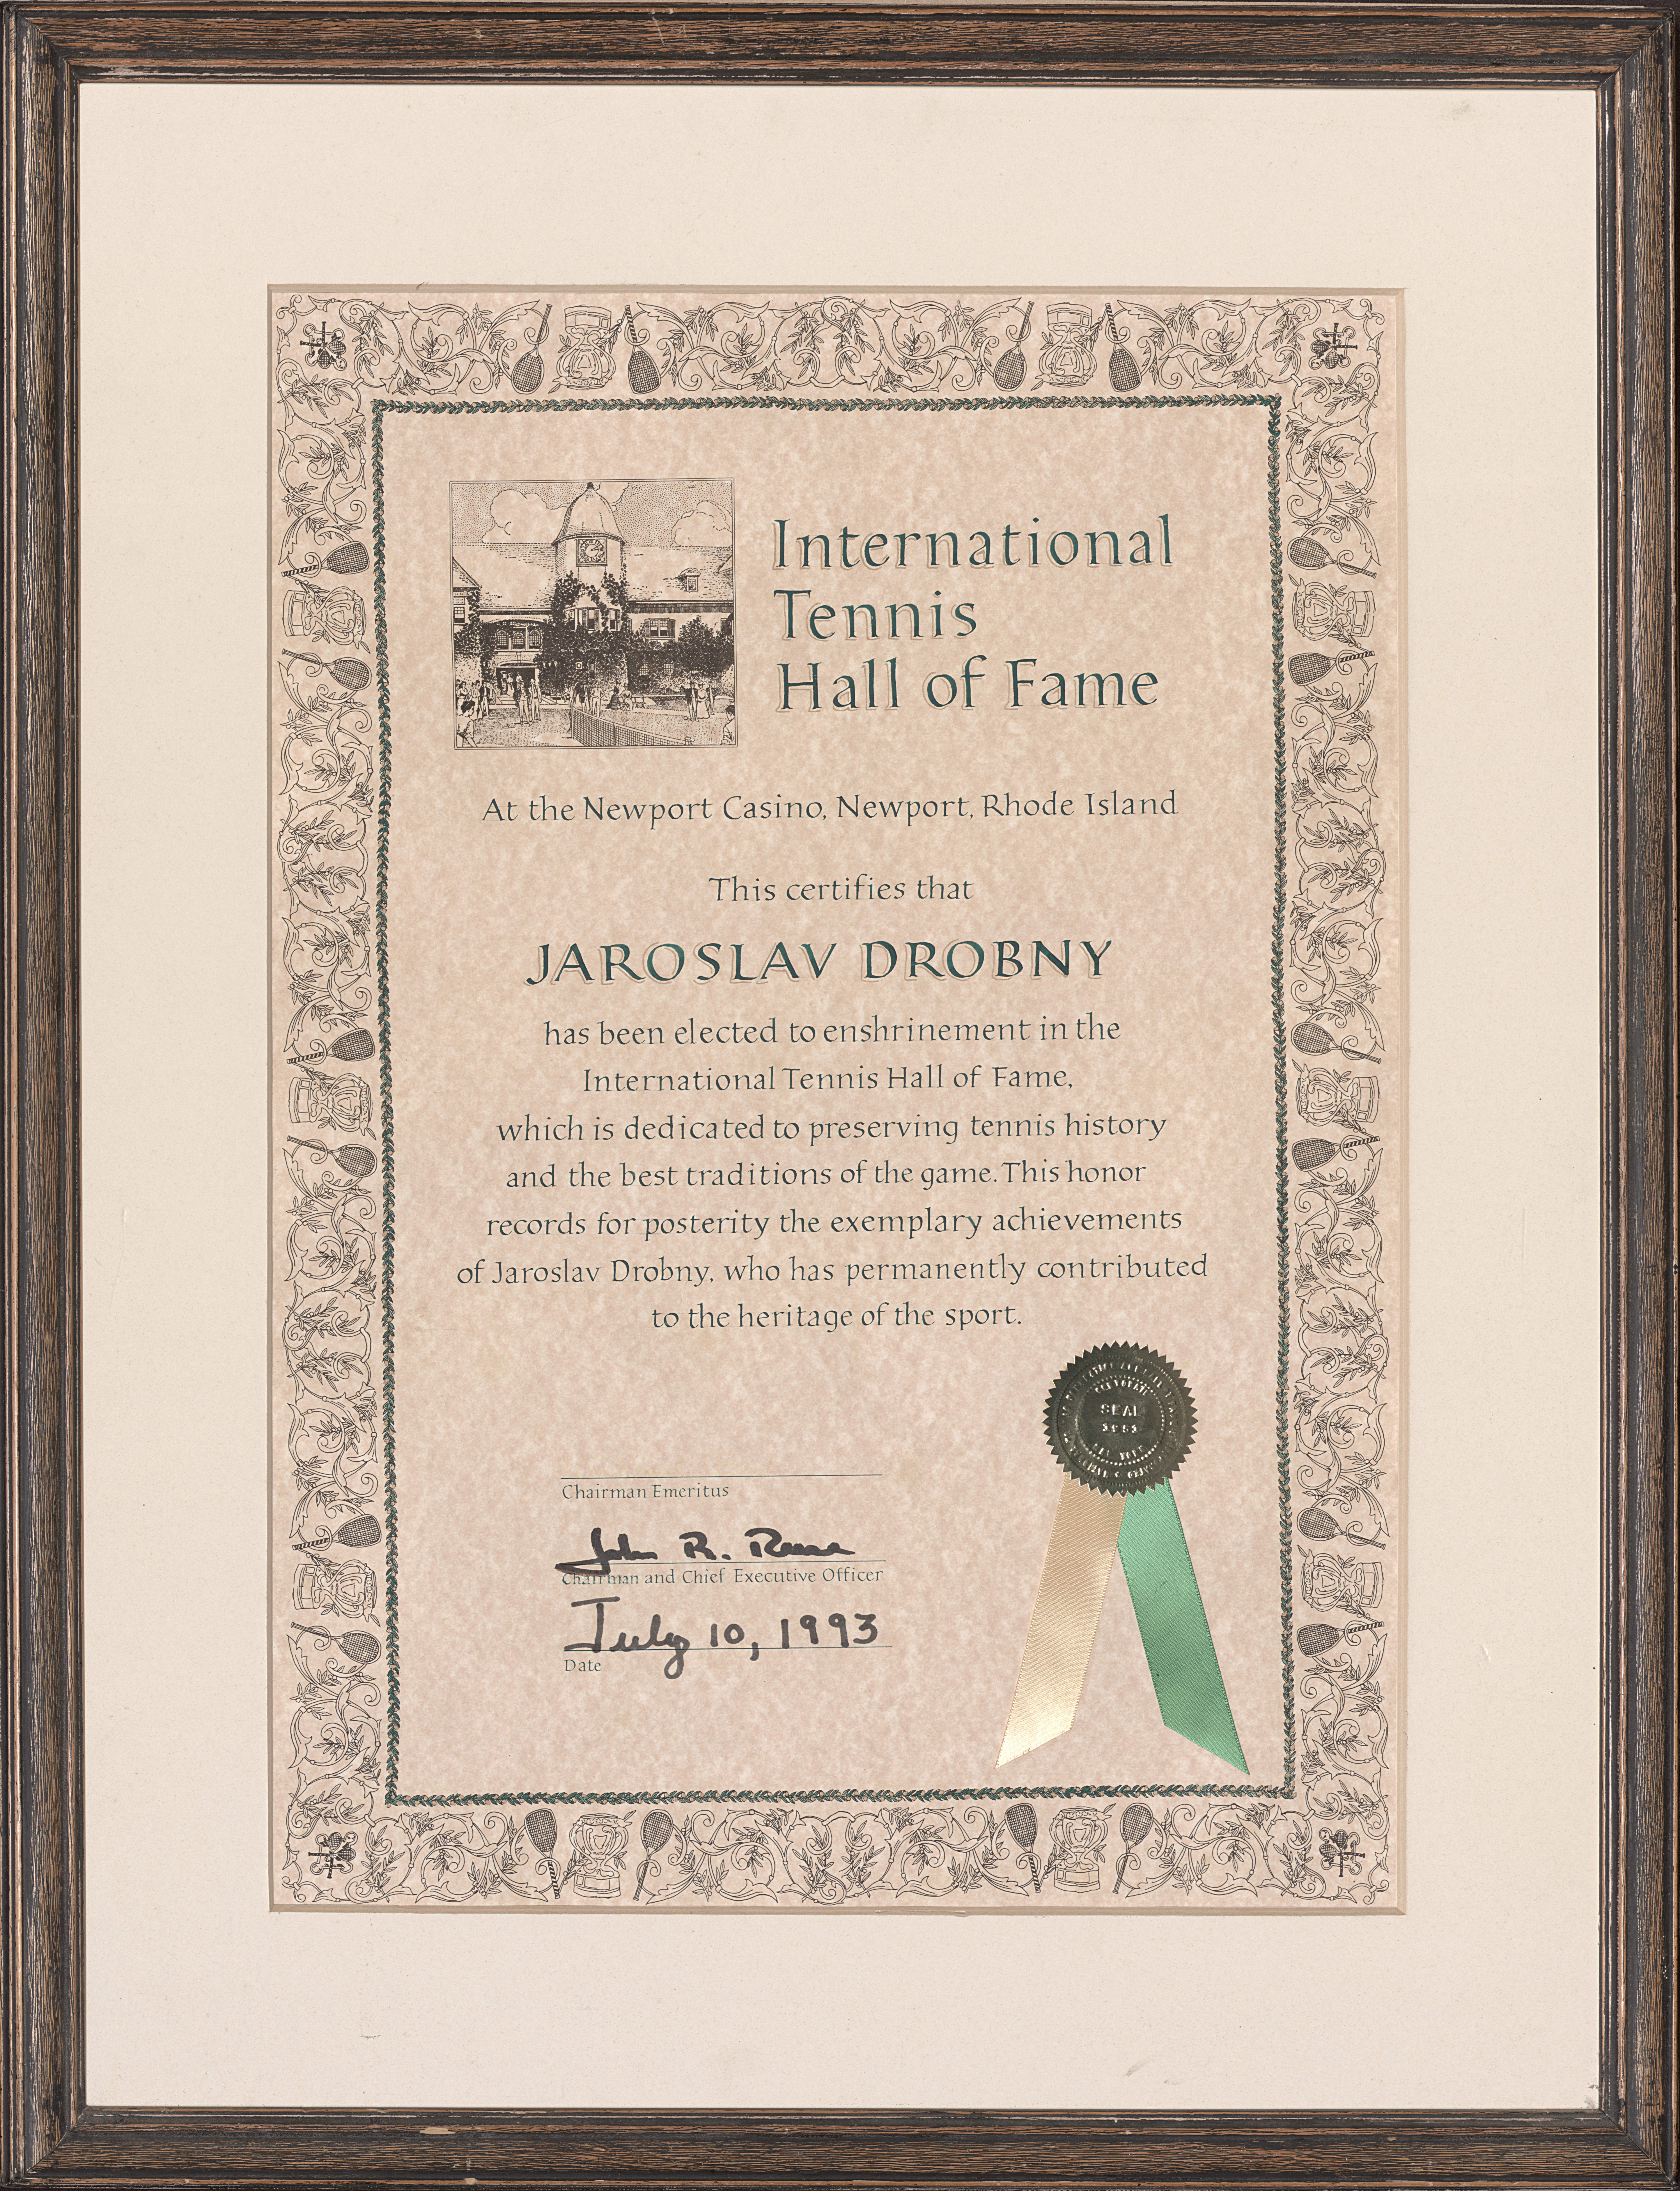 Jaroslav Drobny’s Hall of Fame Enshrinement Certificate